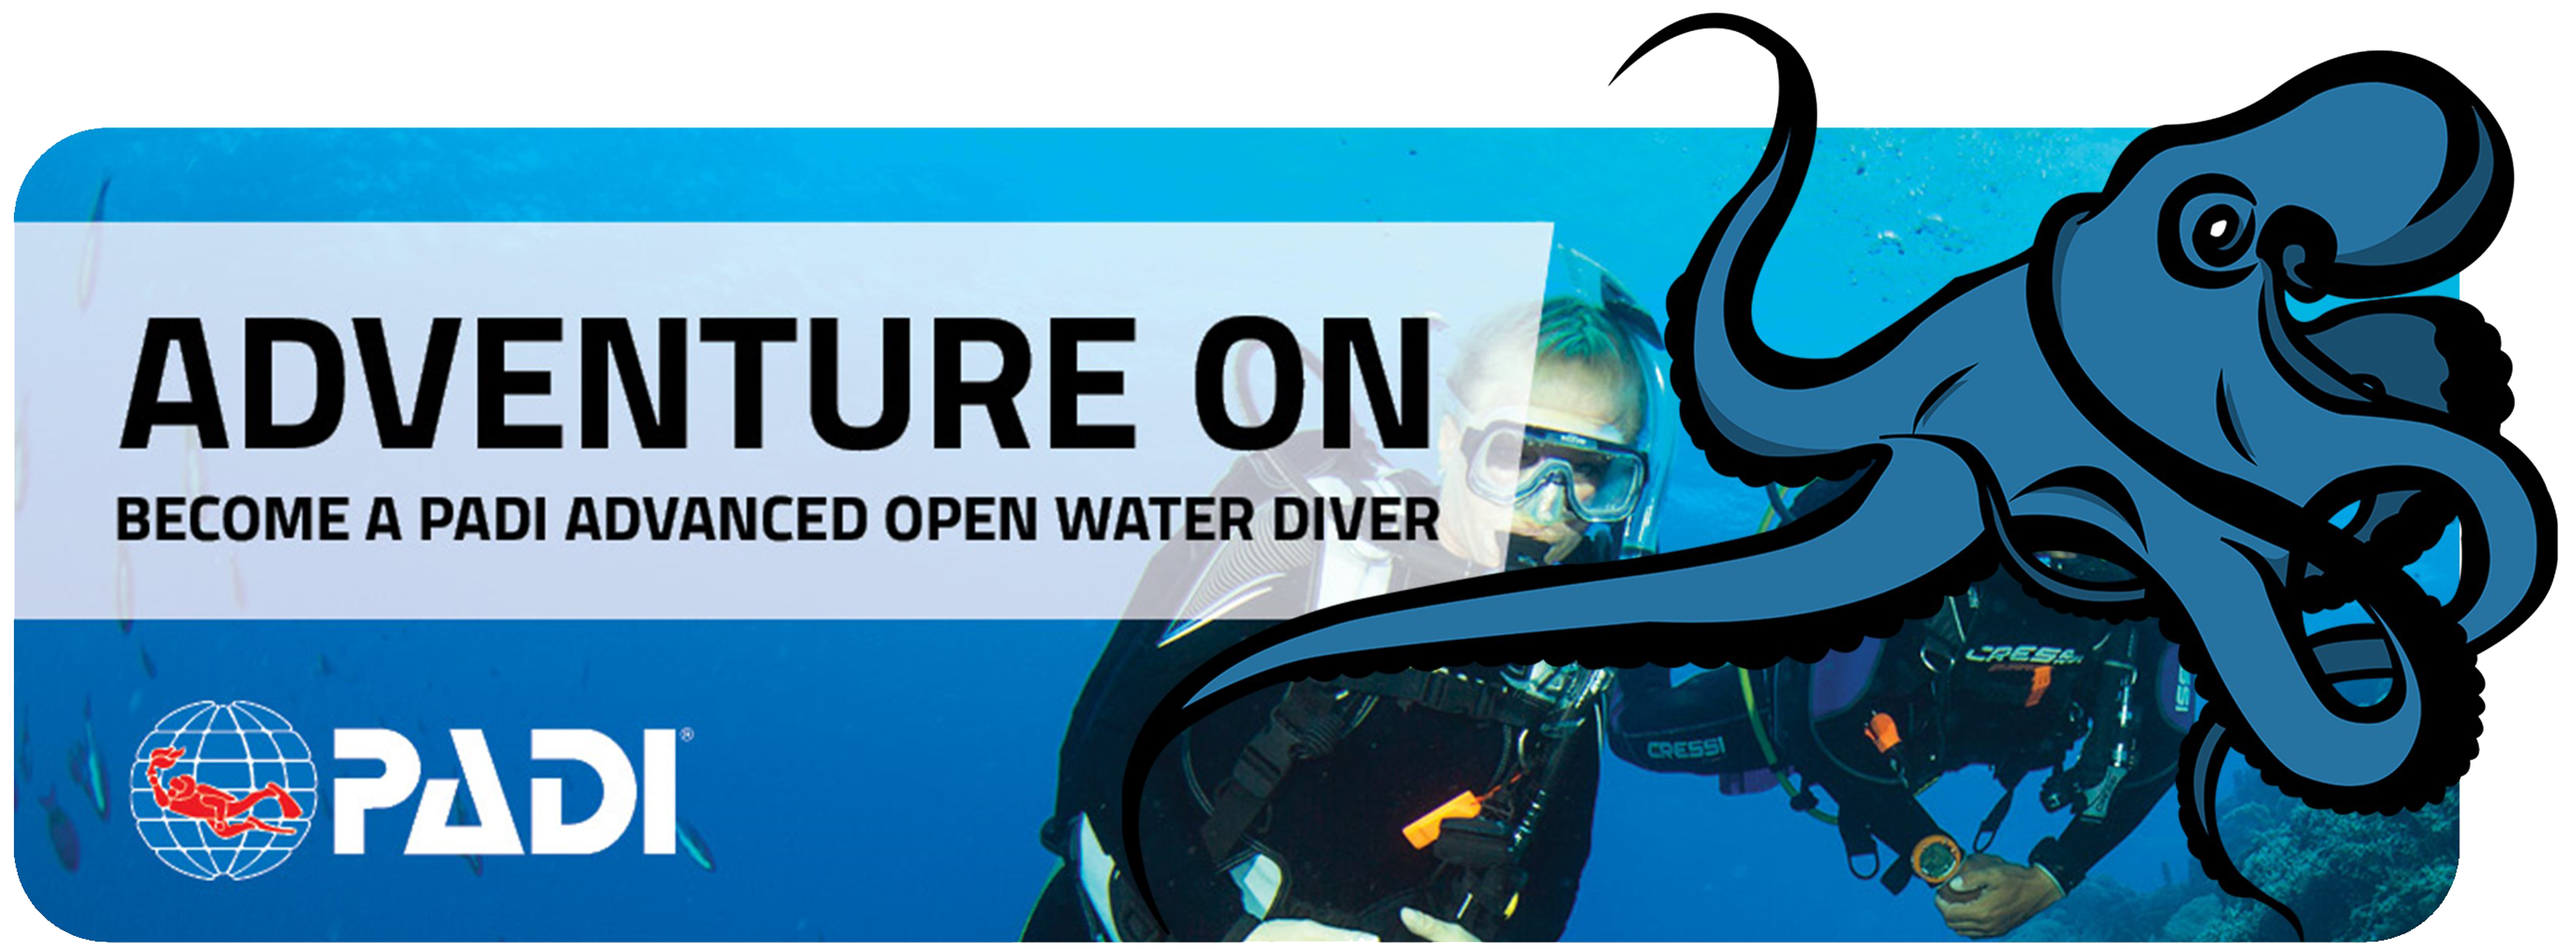 Advanced Open Water Diver banner